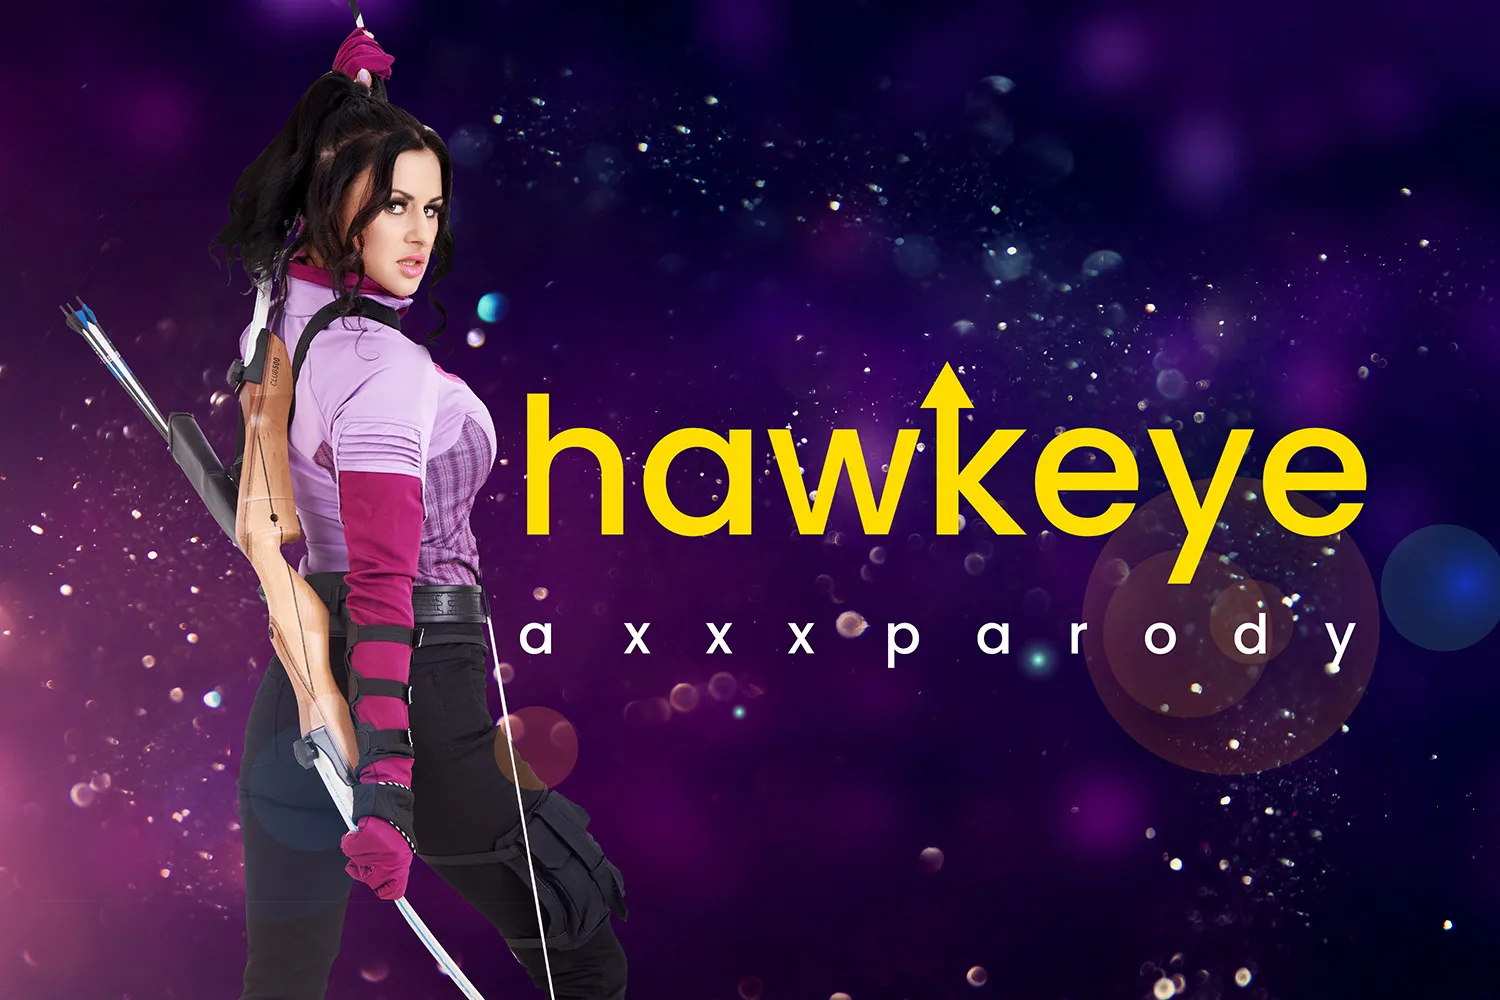 [2022-01-20] Hawkeye: Kate Bishop A XXX Parody - VRCosplayX